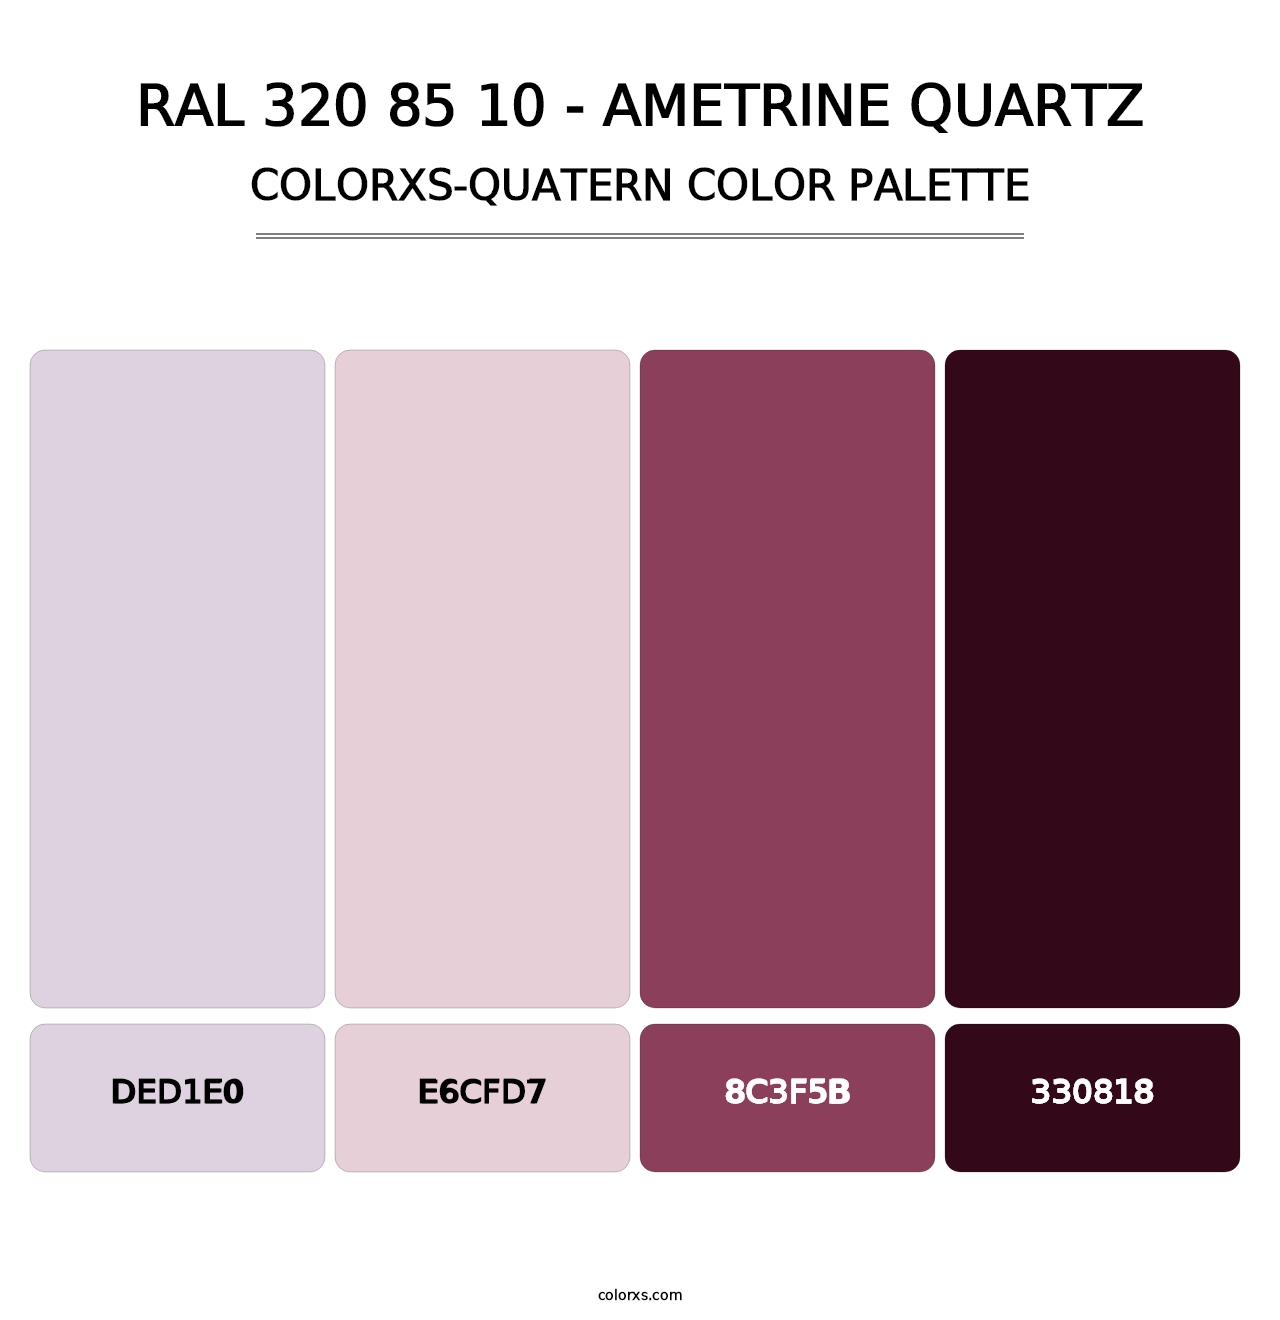 RAL 320 85 10 - Ametrine Quartz - Colorxs Quatern Palette